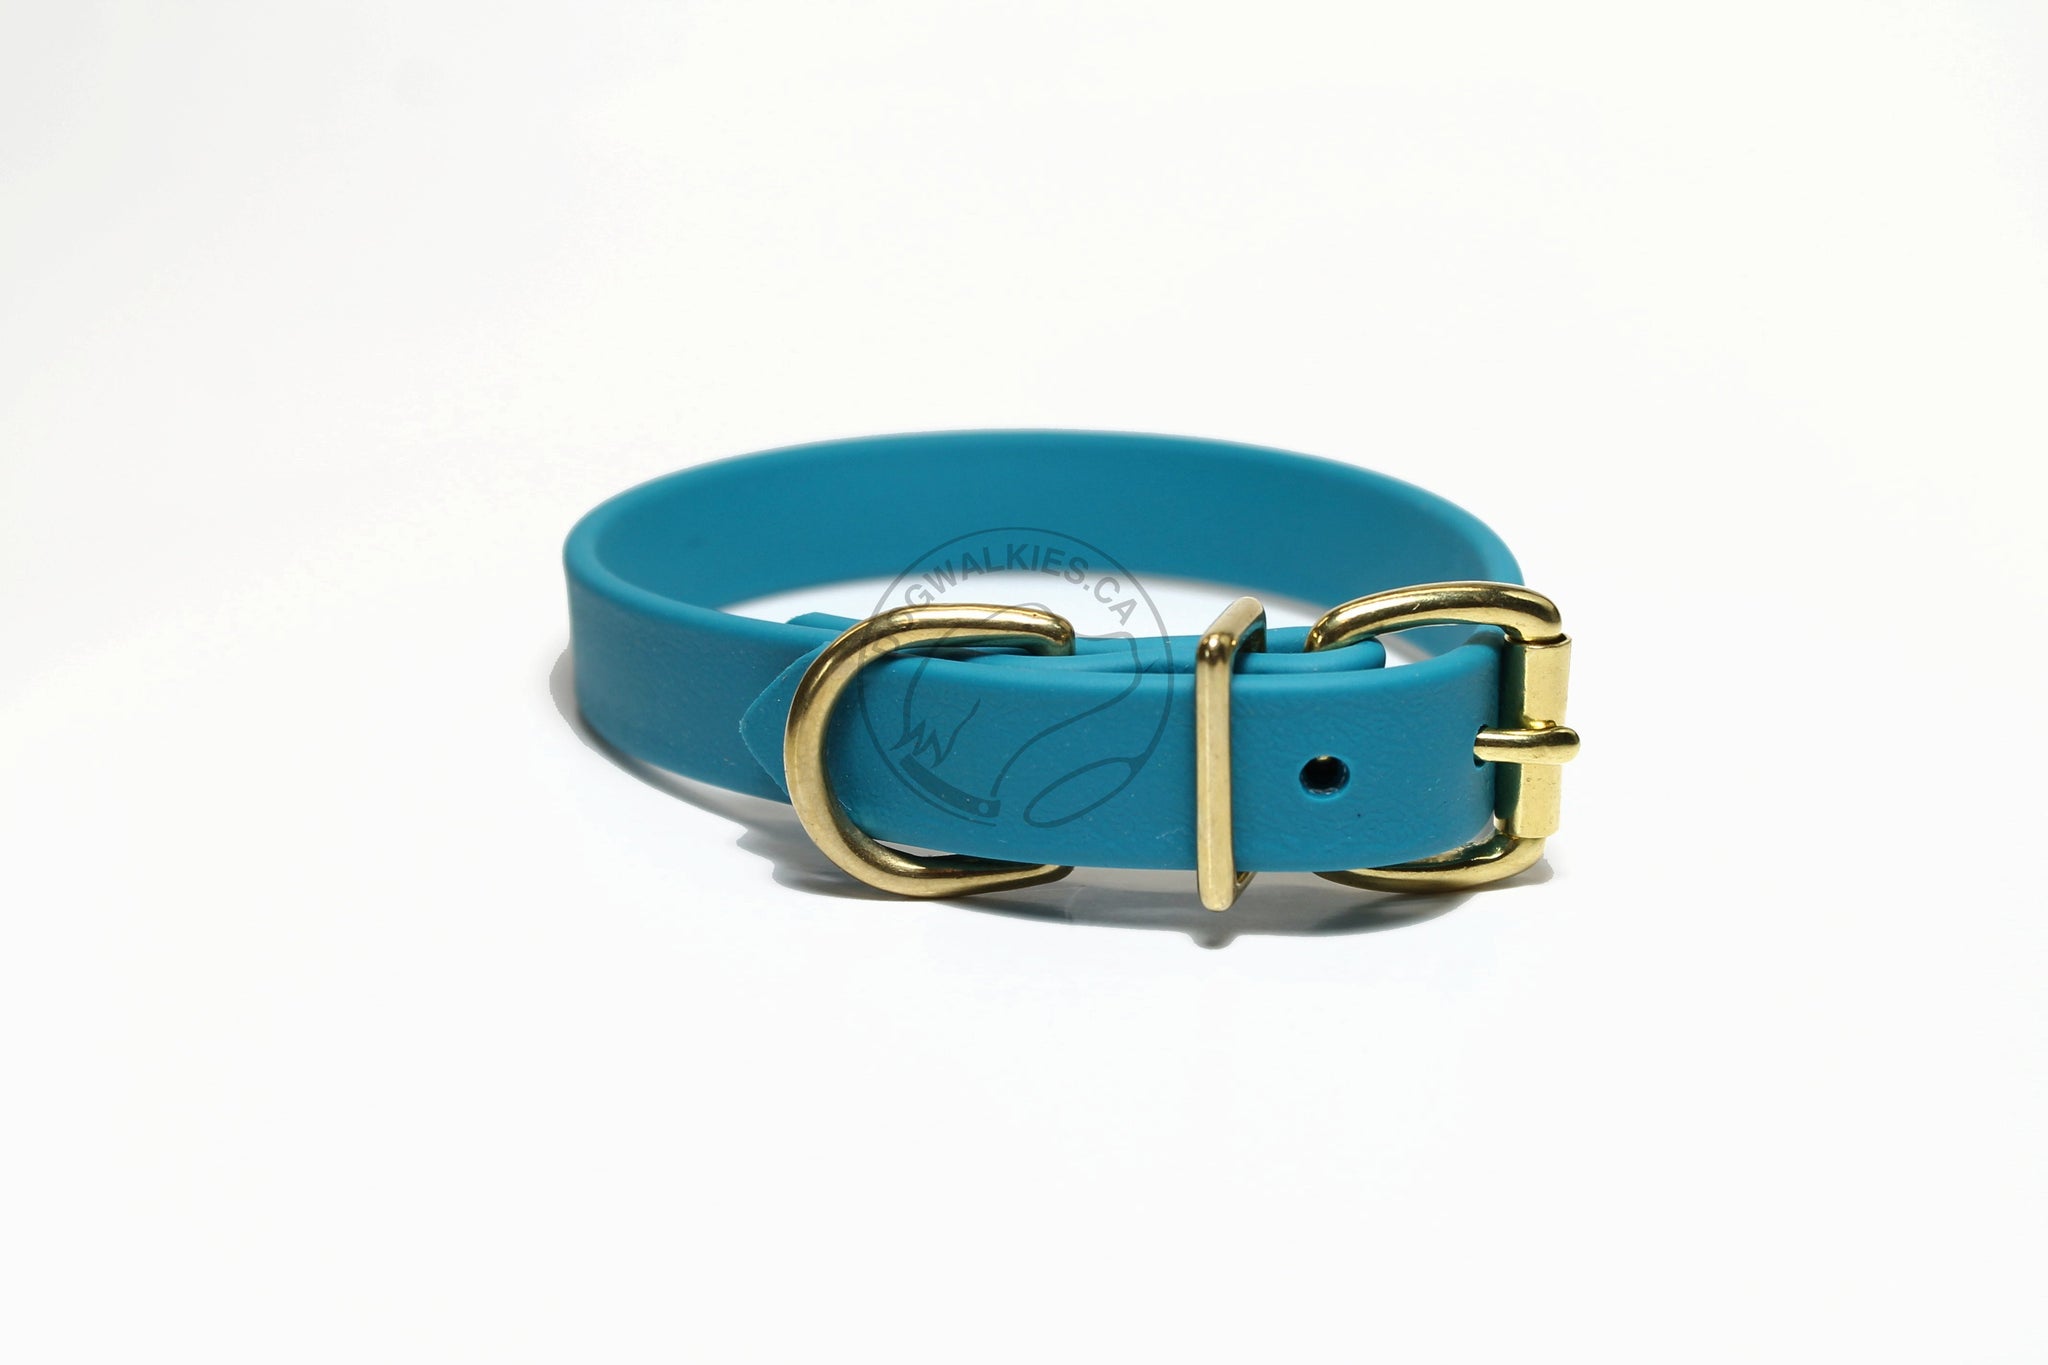 Oasis Blue Biothane Dog Collar - 3/4" (20mm) wide